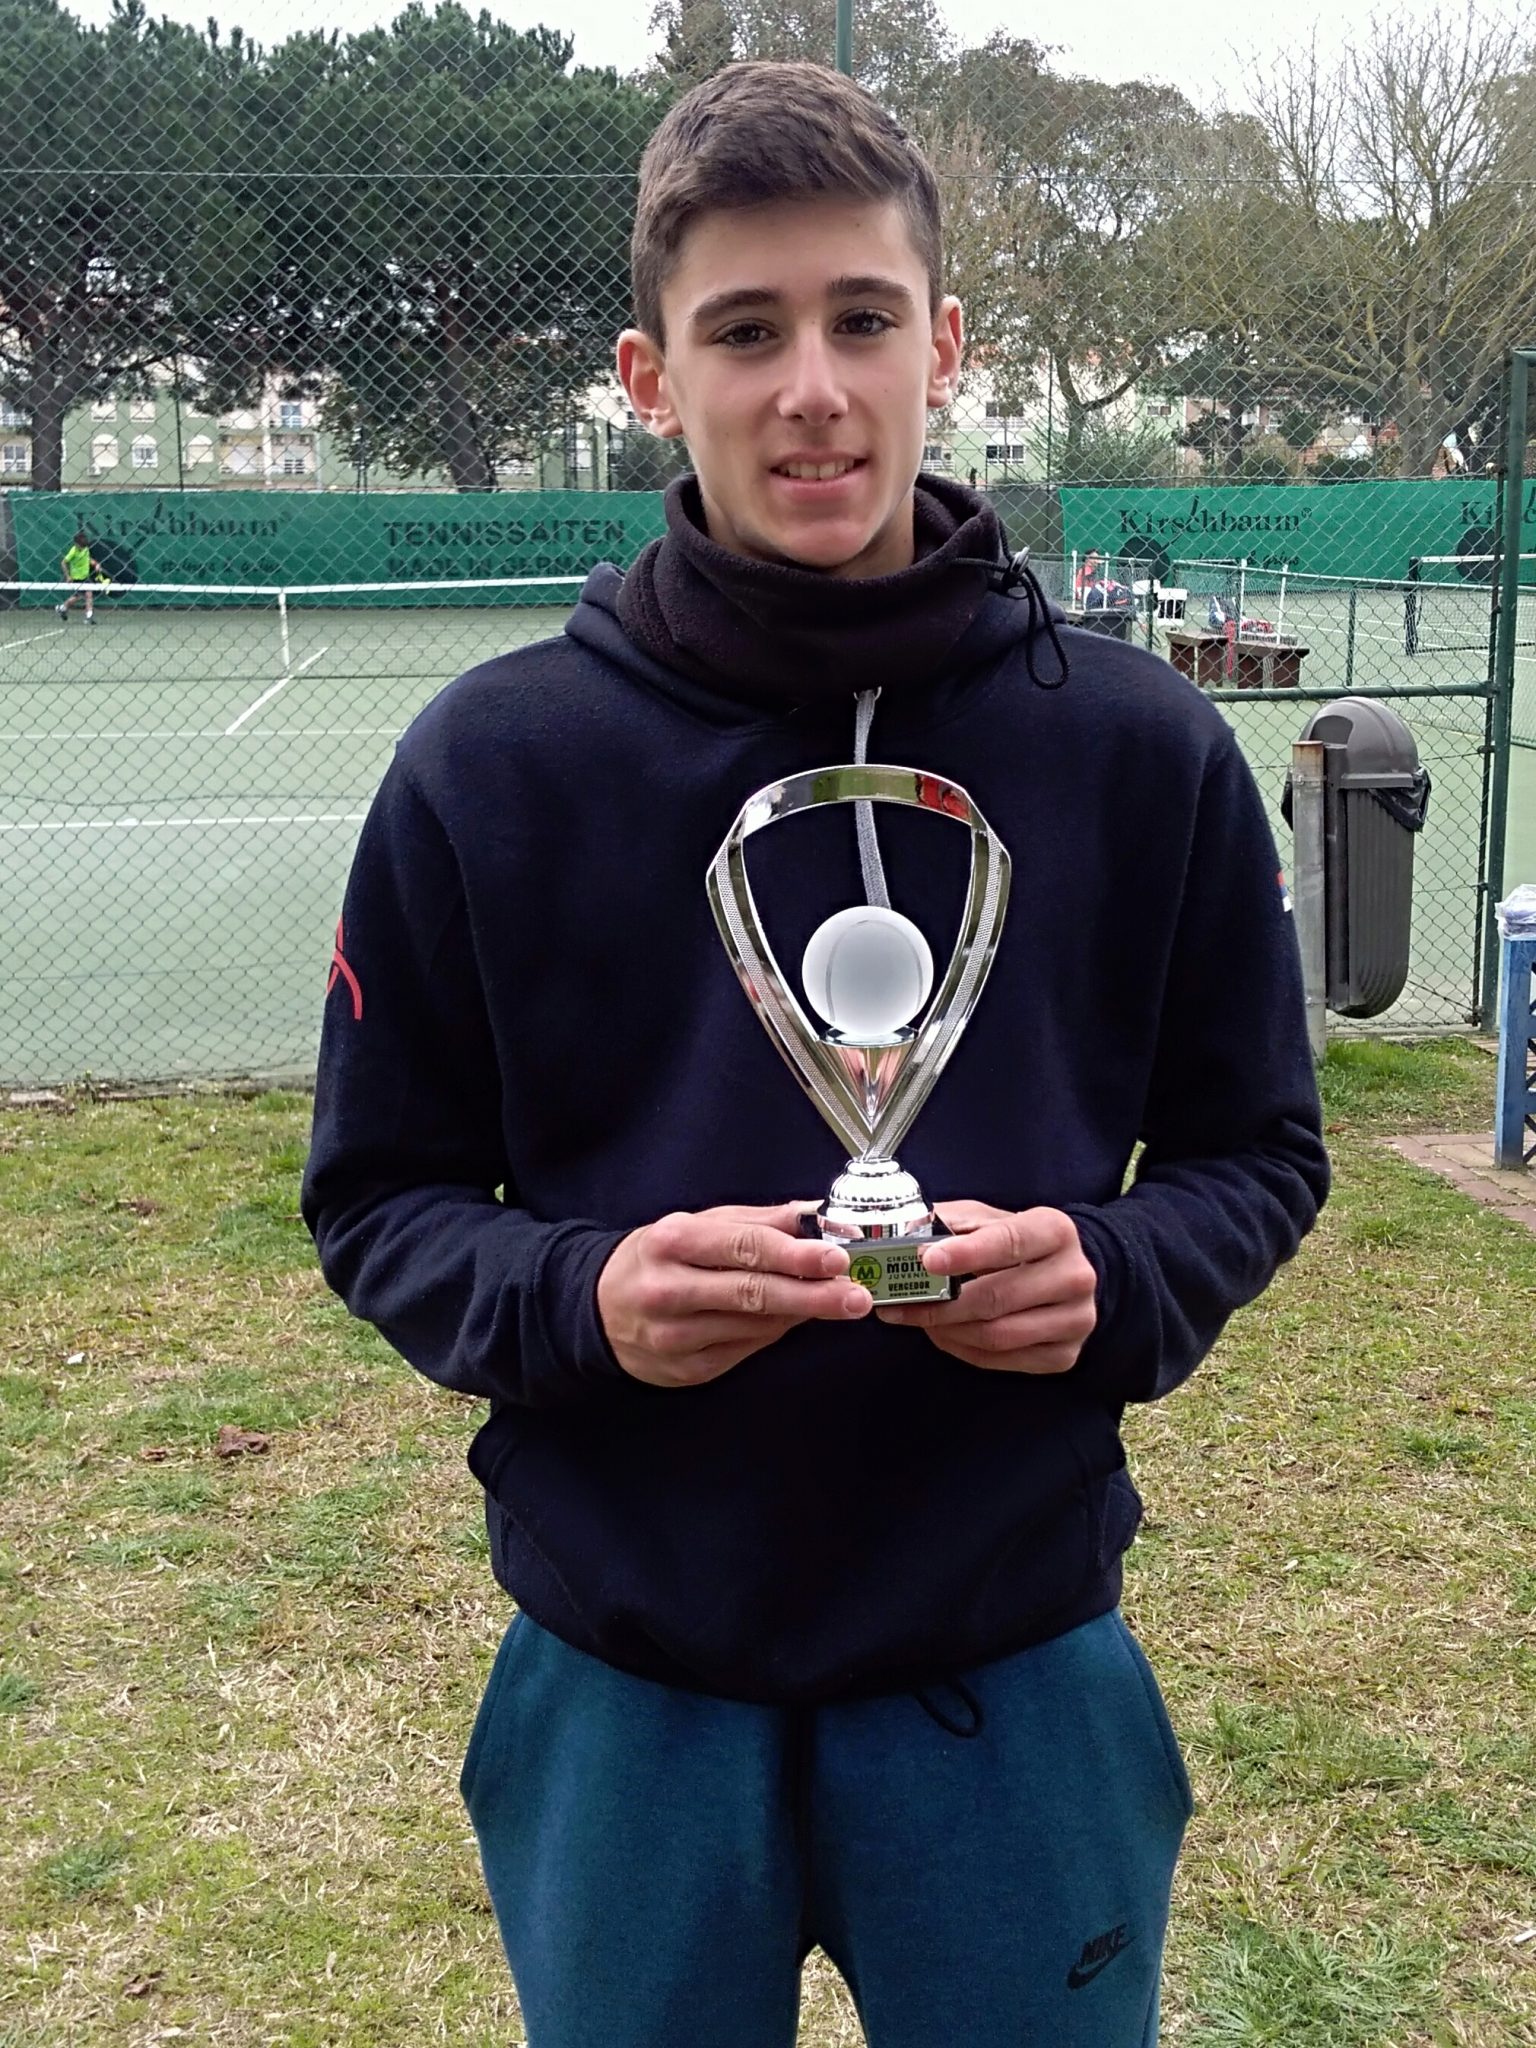 Parabéns ao nosso atleta Alexandre Belchior, Vencedor do Torneio “Circuito Juvenil Sub 16 Moita Juvenil 2018, realizado na “Meta”!